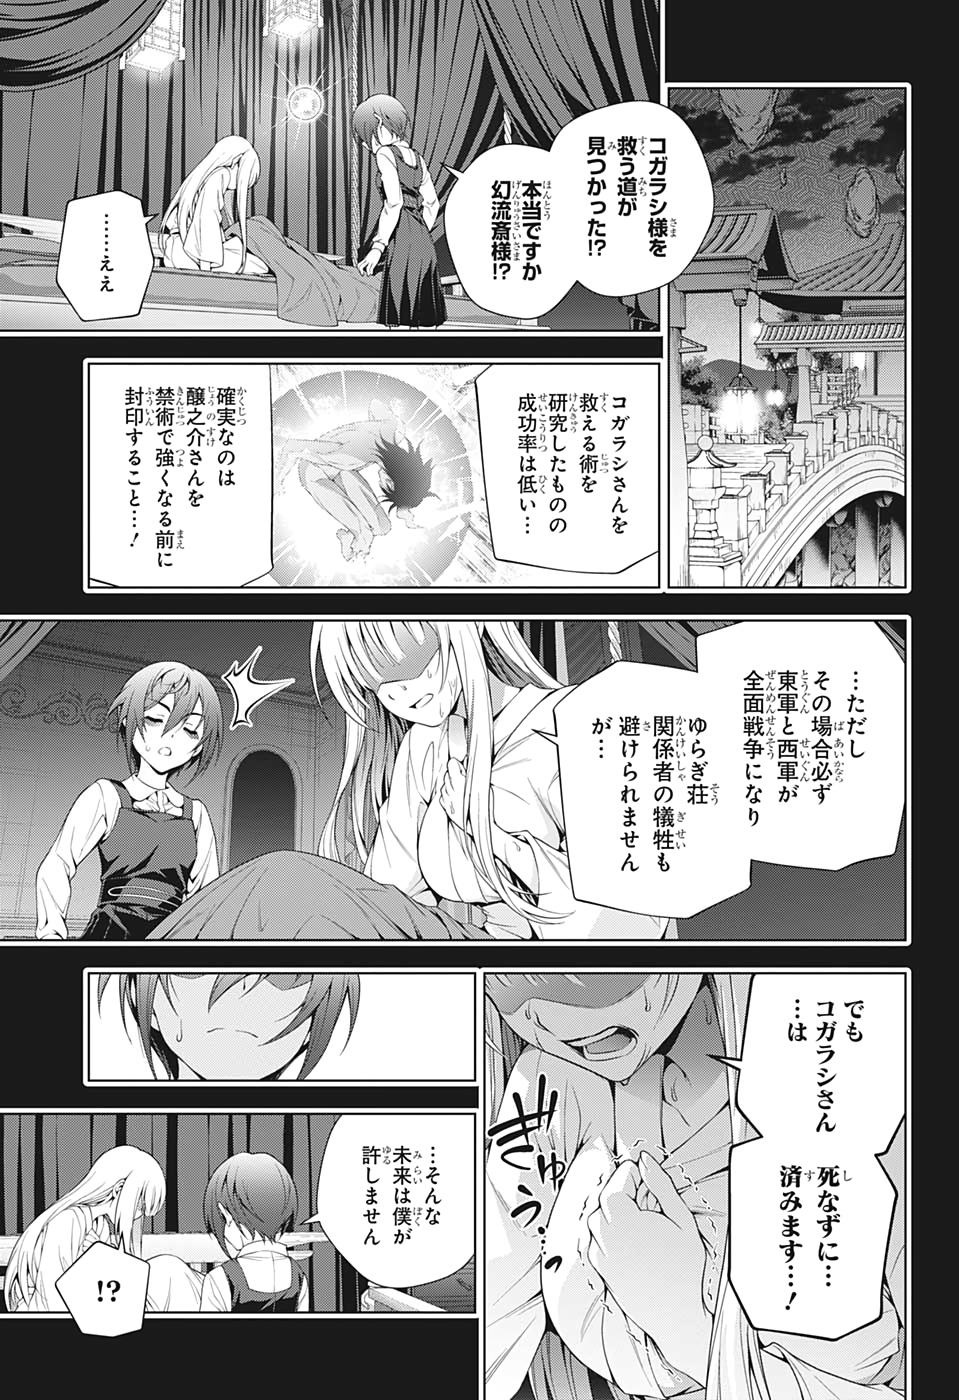 Yuragi-sou no Yuuna-san - ゆらぎ荘の幽奈さん - Chapter 207 - Page 3